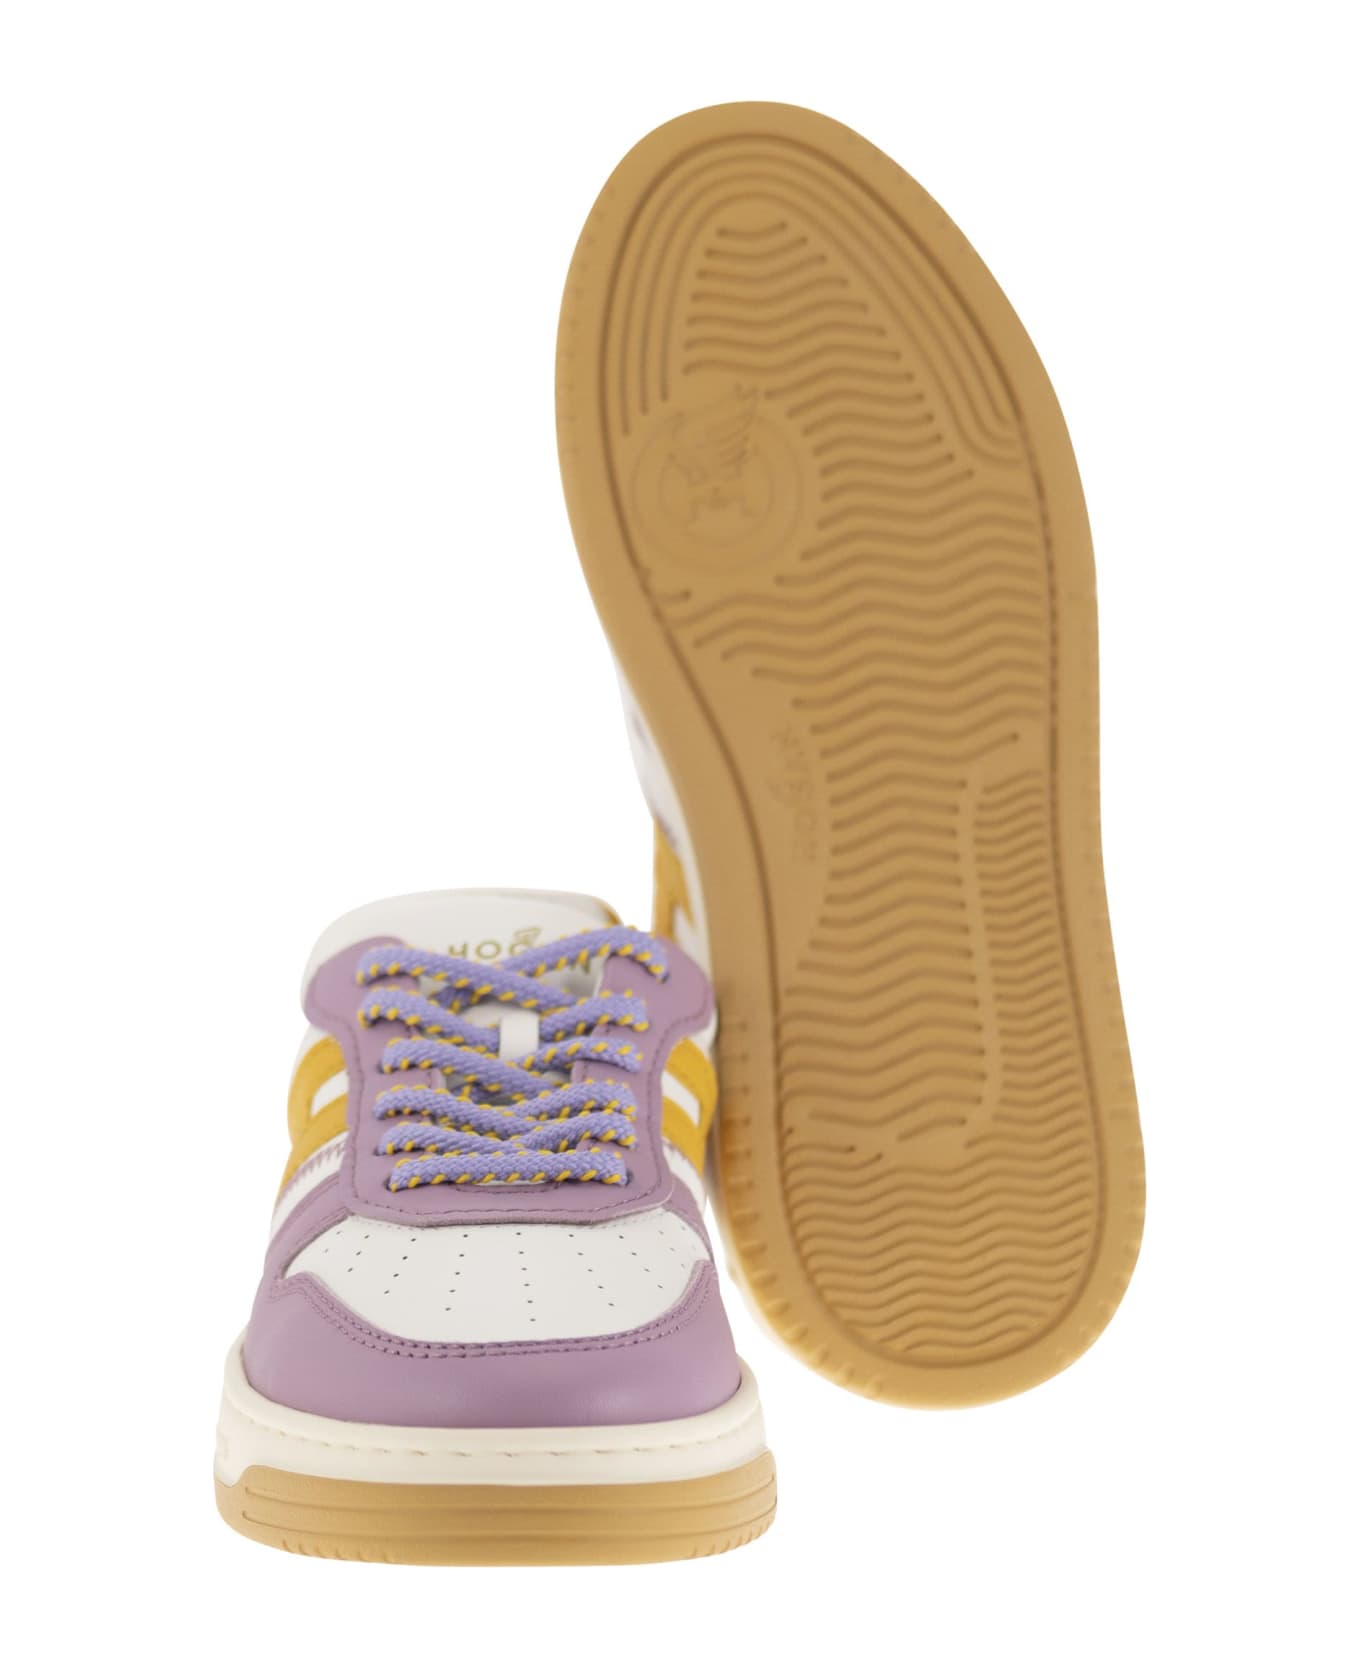 Hogan H630 Sneakers - Purple/yellow